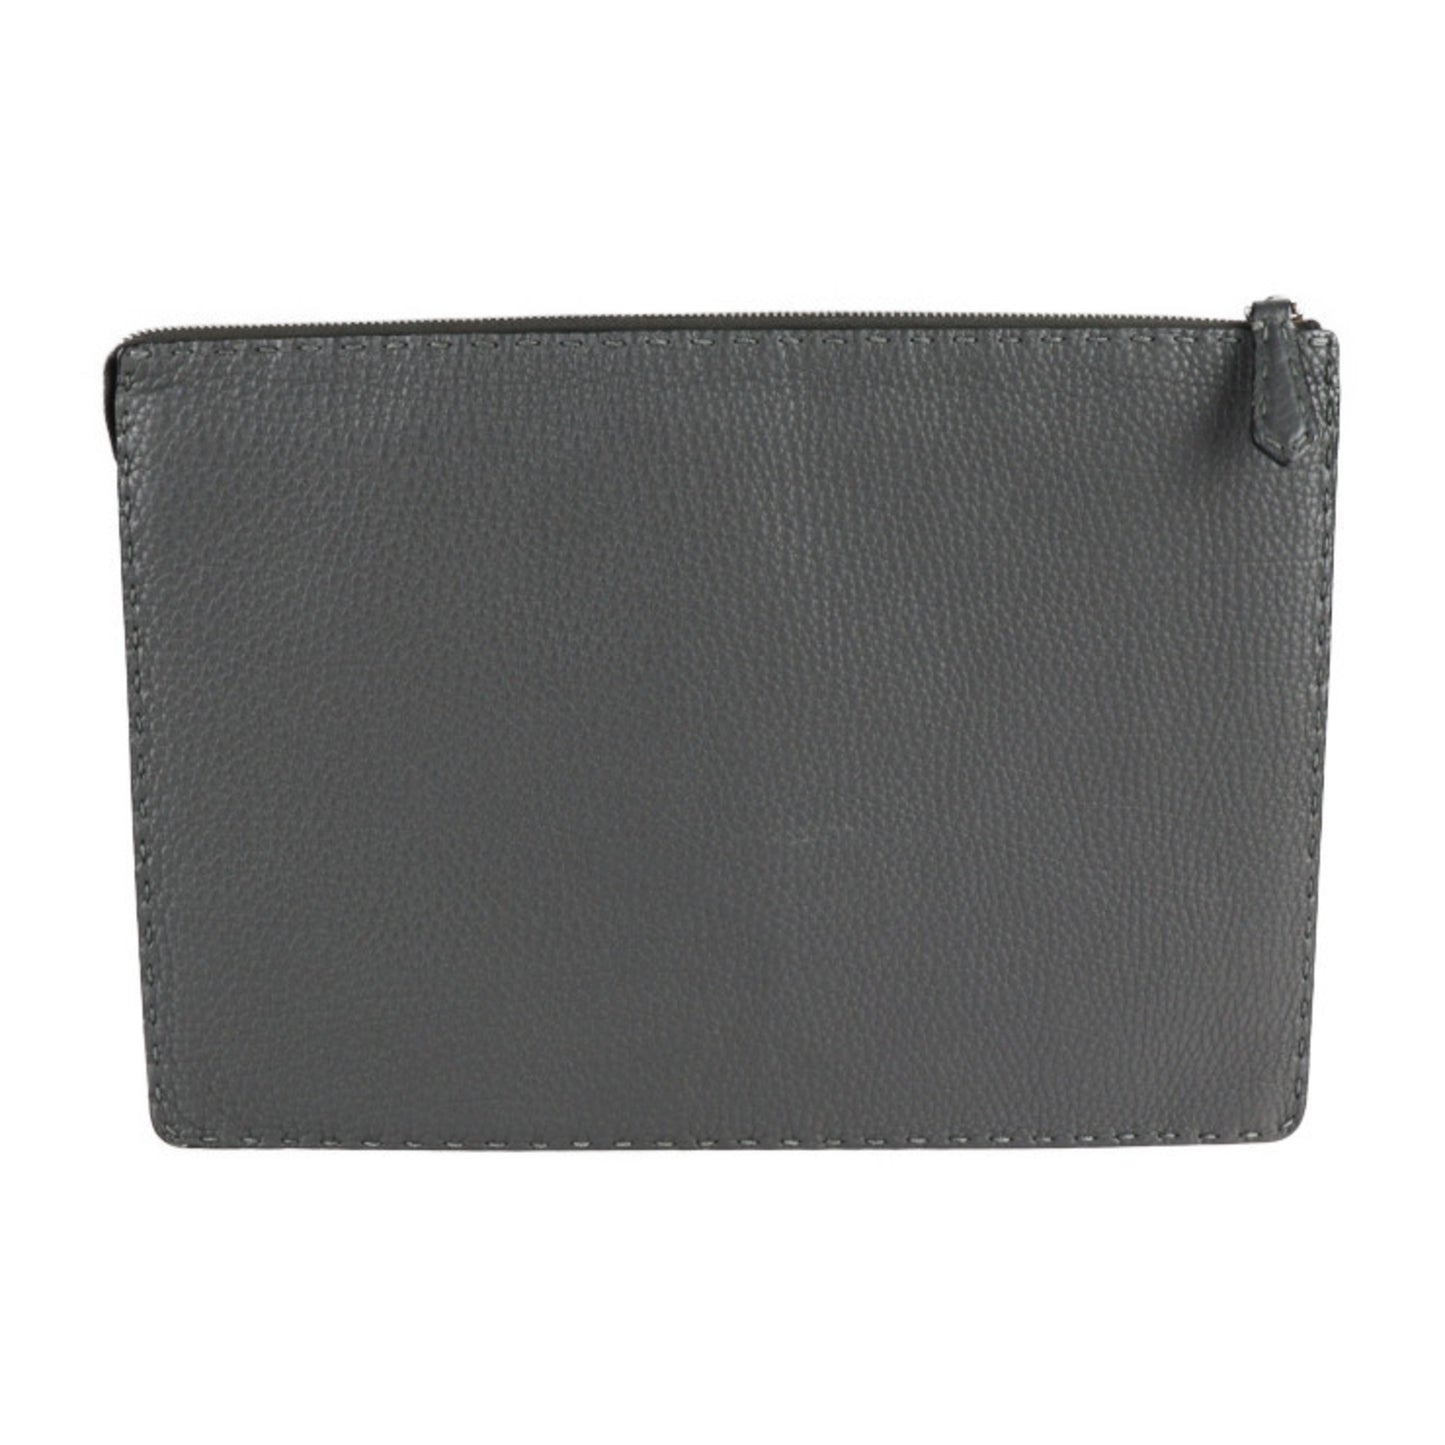 Fendi Men's Leather Grey Clutch Bag in Grey